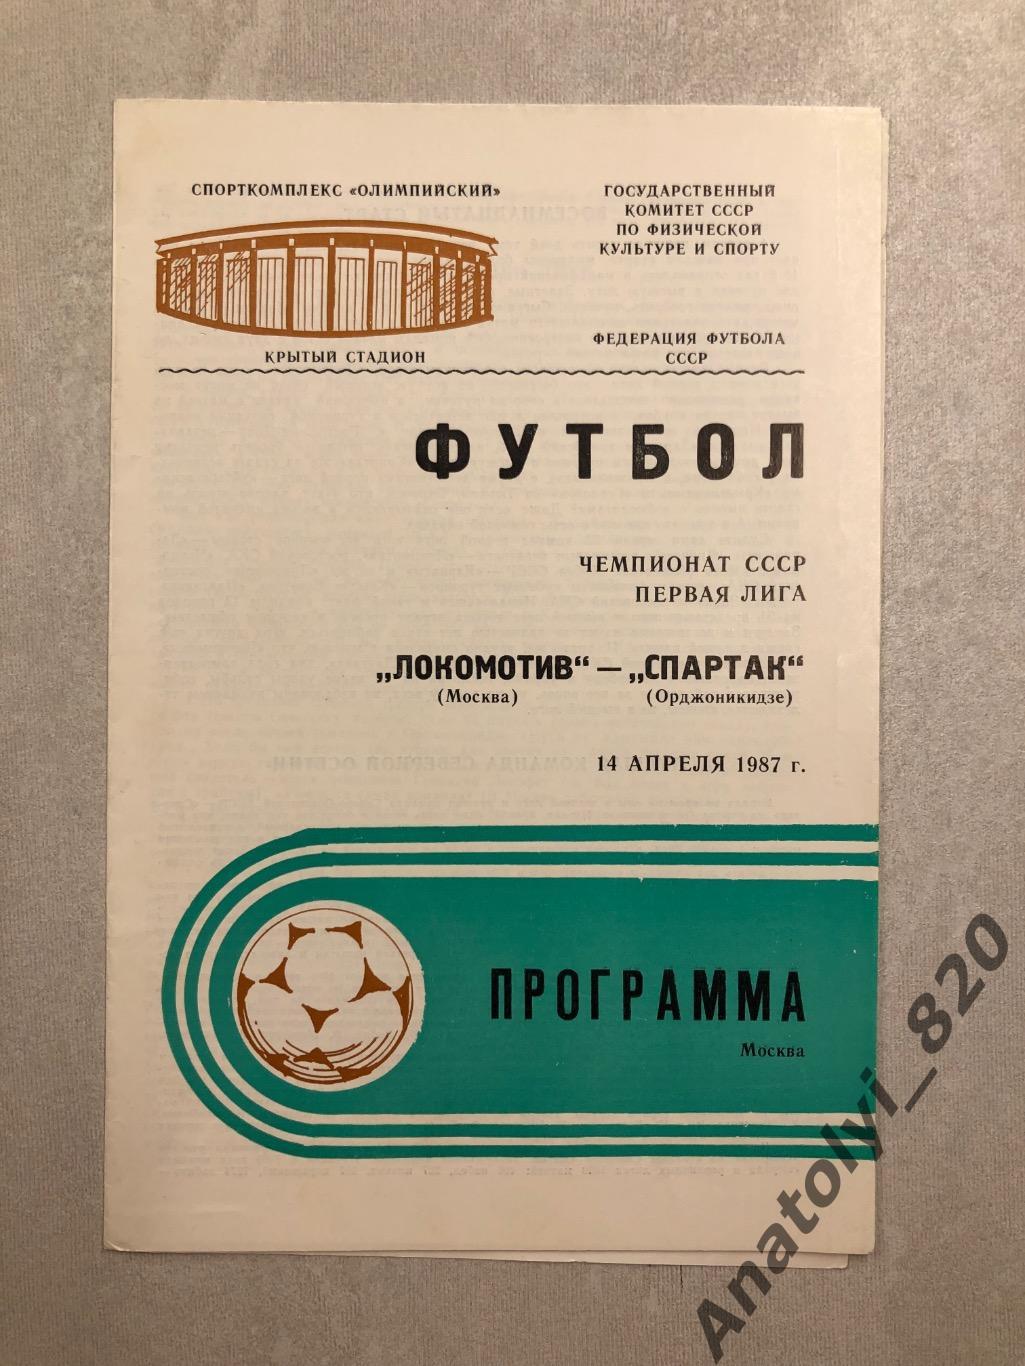 Локомотив Москва - Спартак Орджоникидзе 1987 год